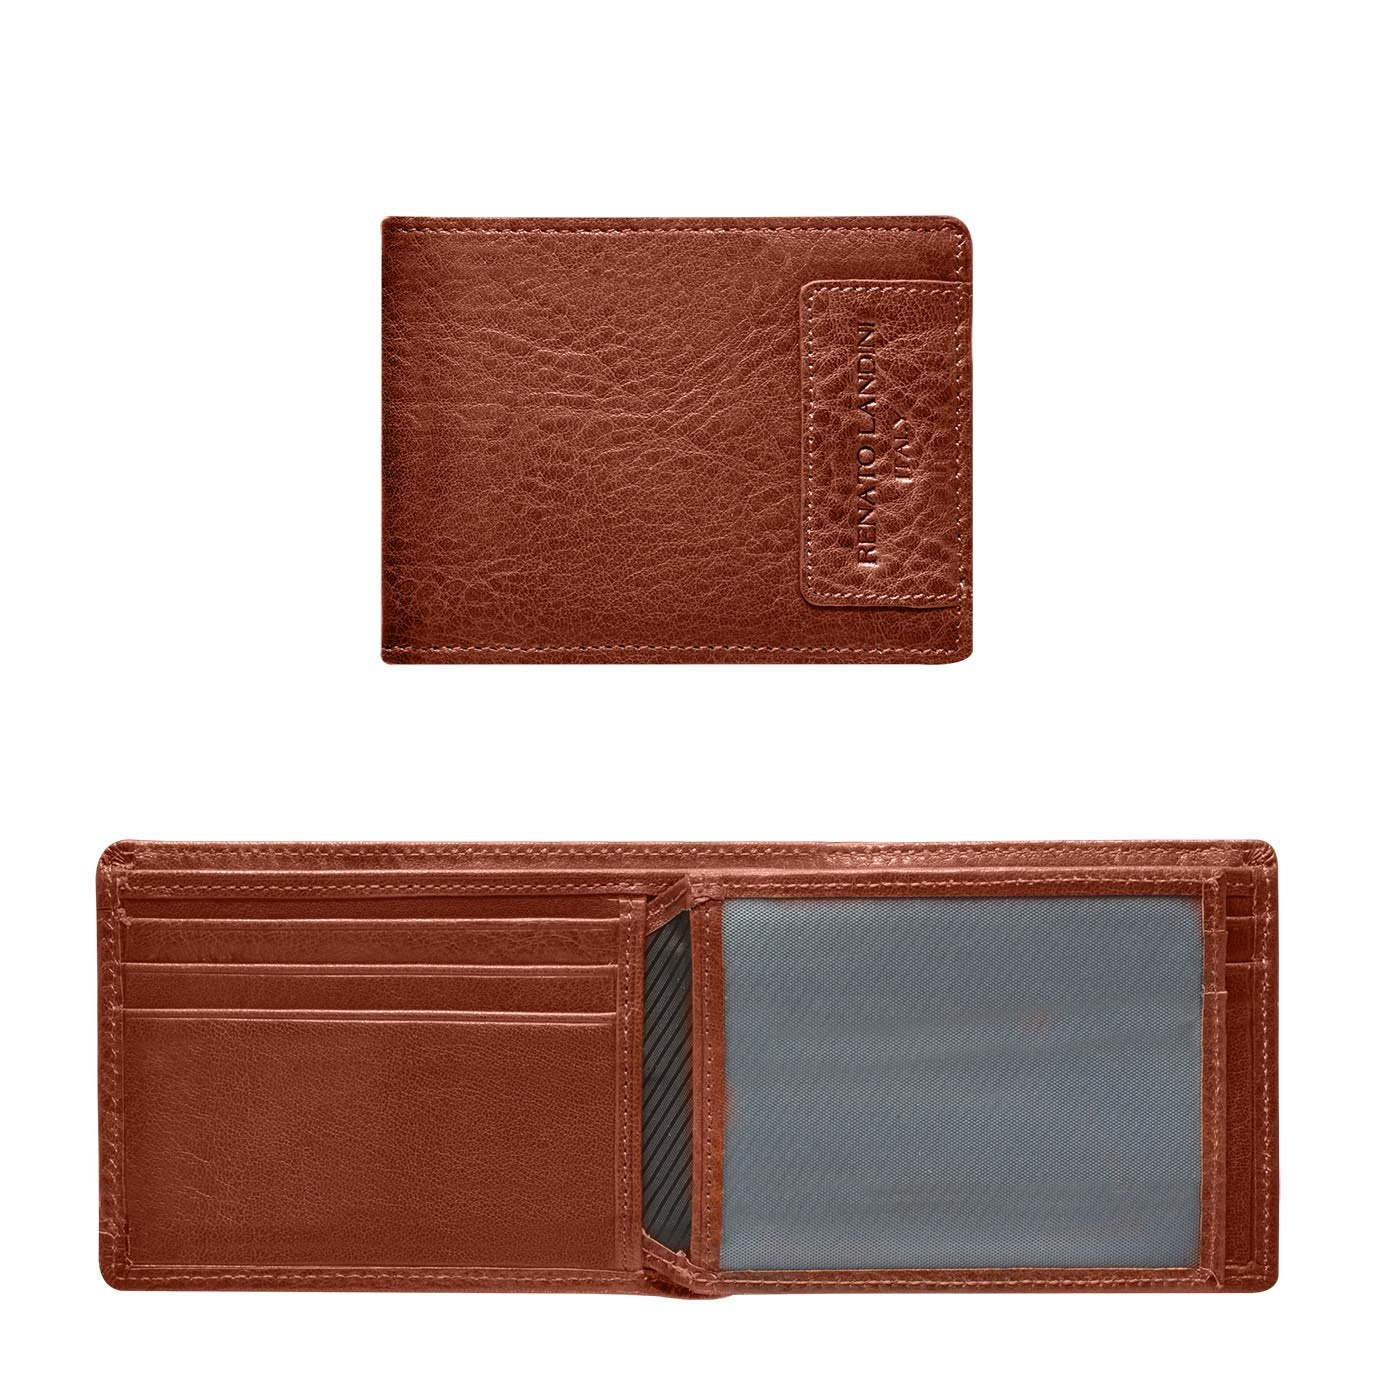 RENATO LANDINI Gent's Wallet/ Icon